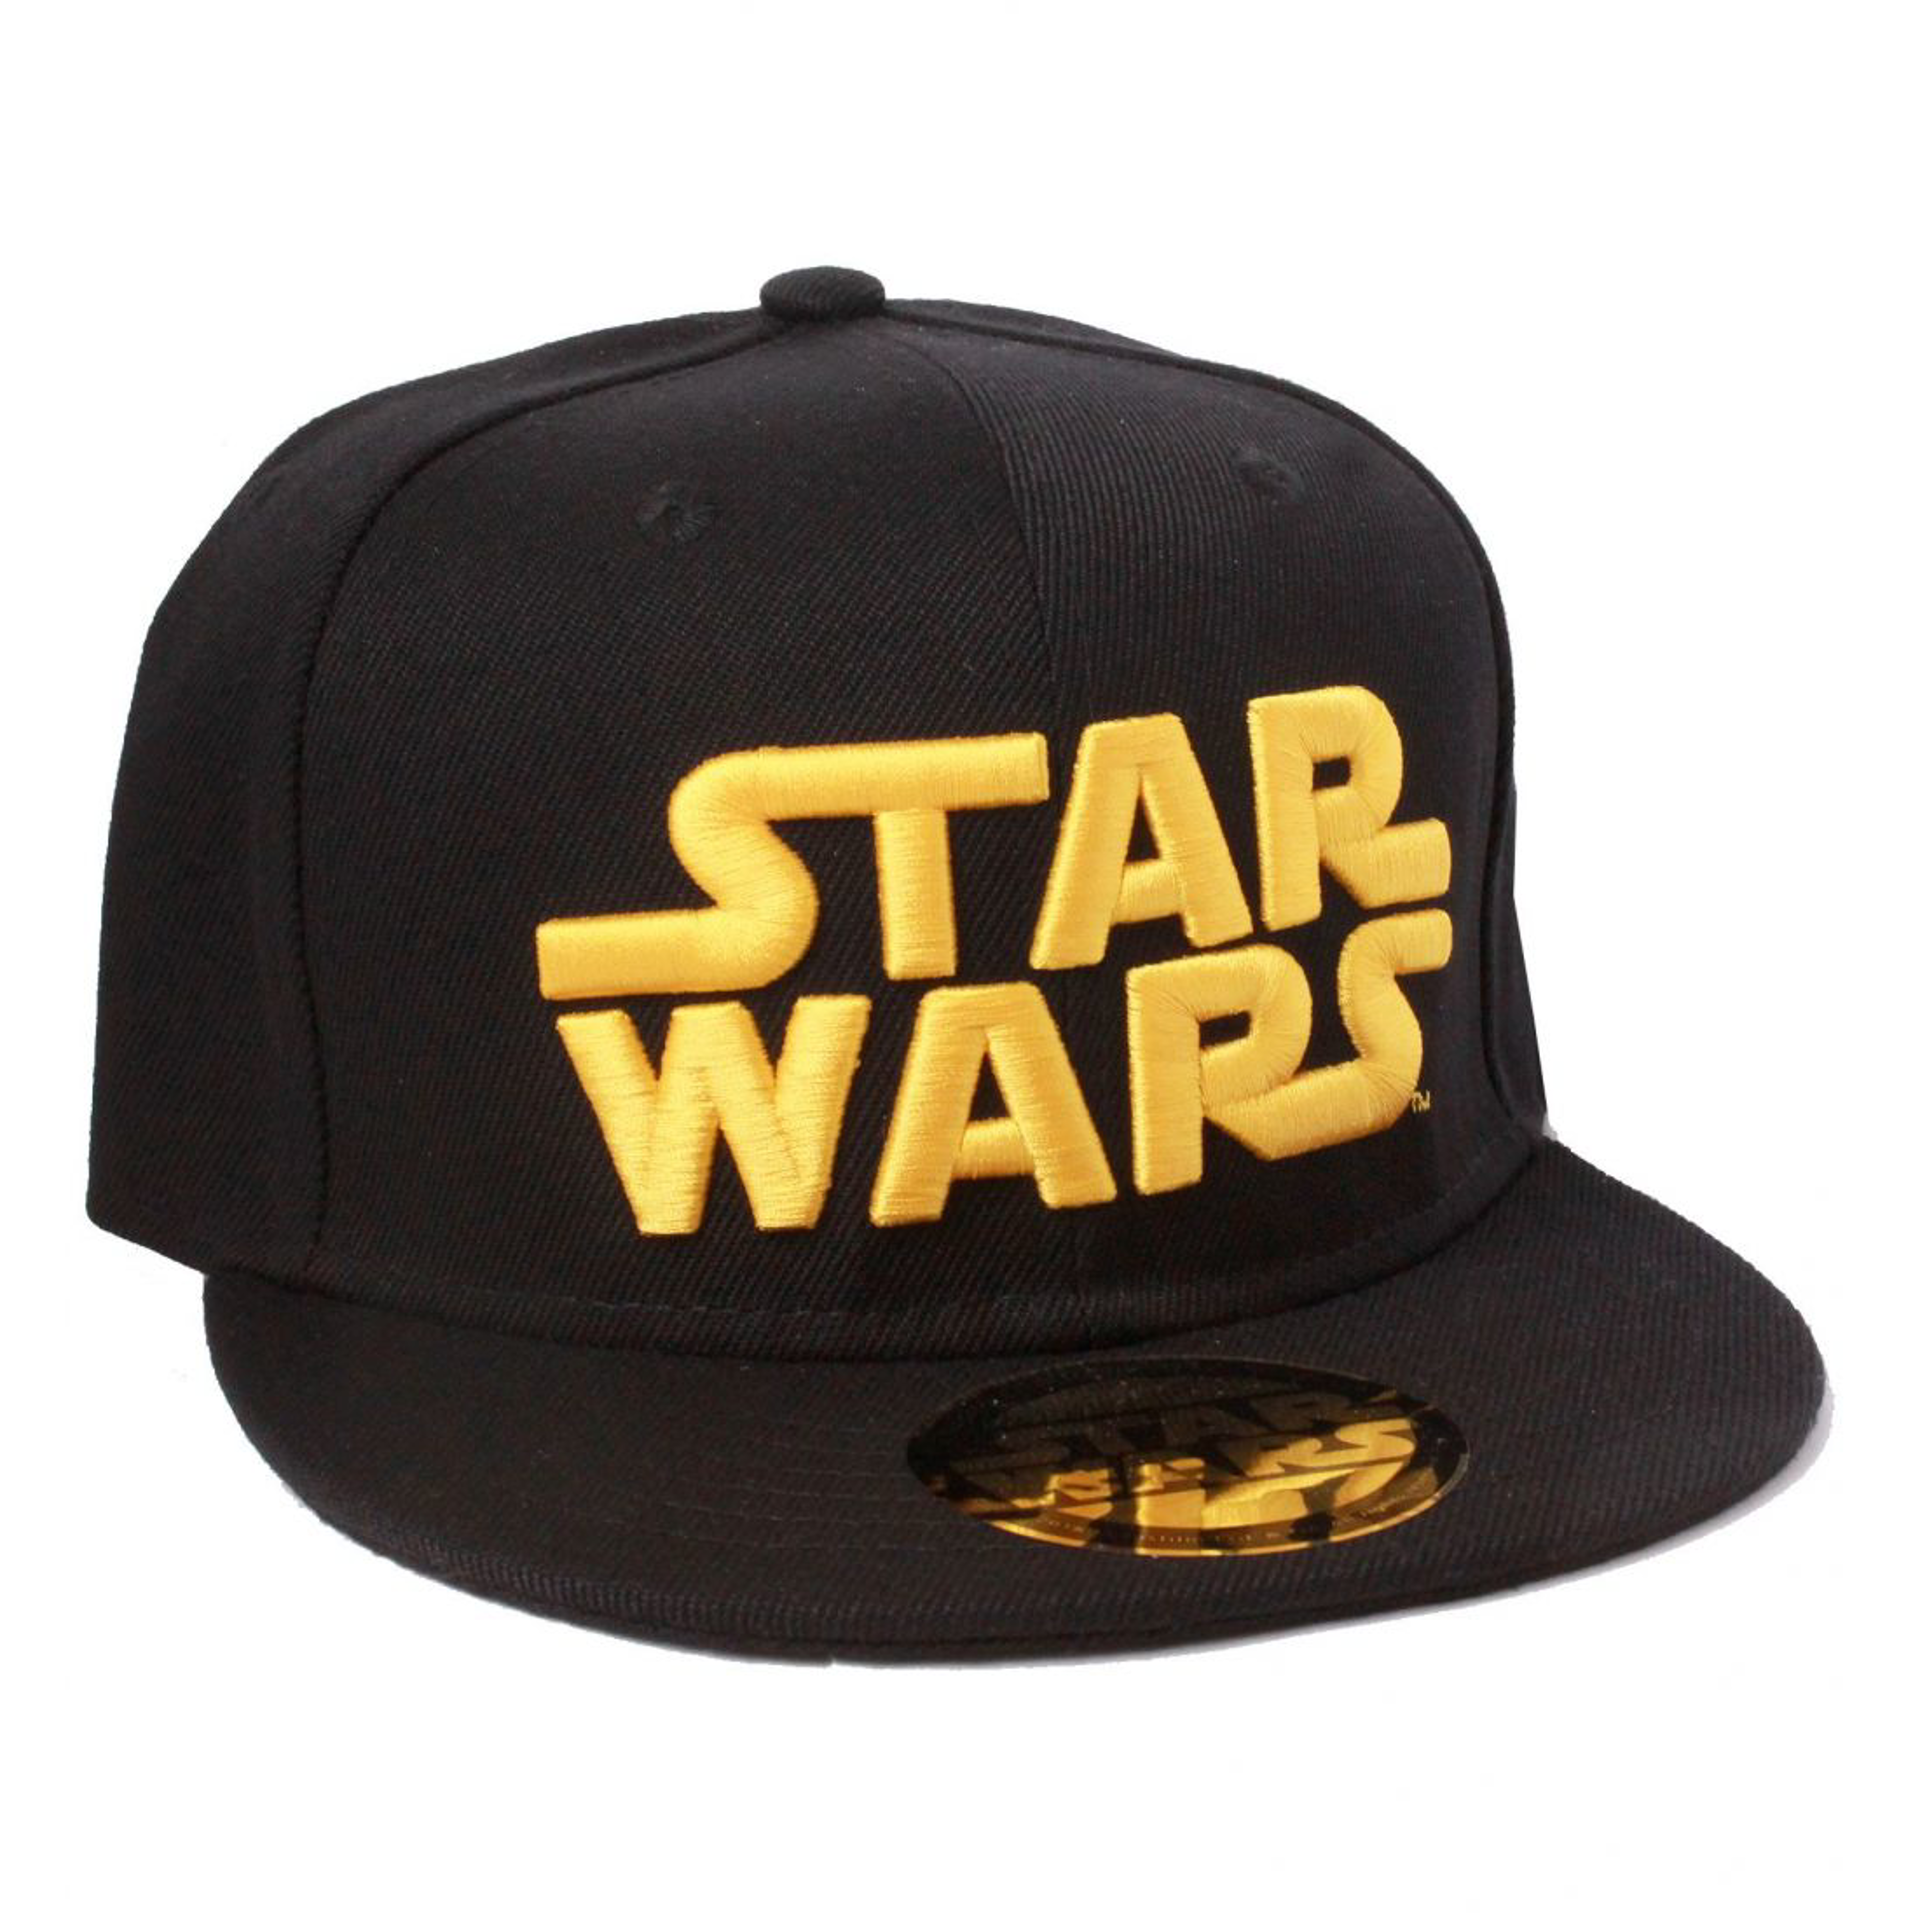 Star Wars - Logo Text Snapback